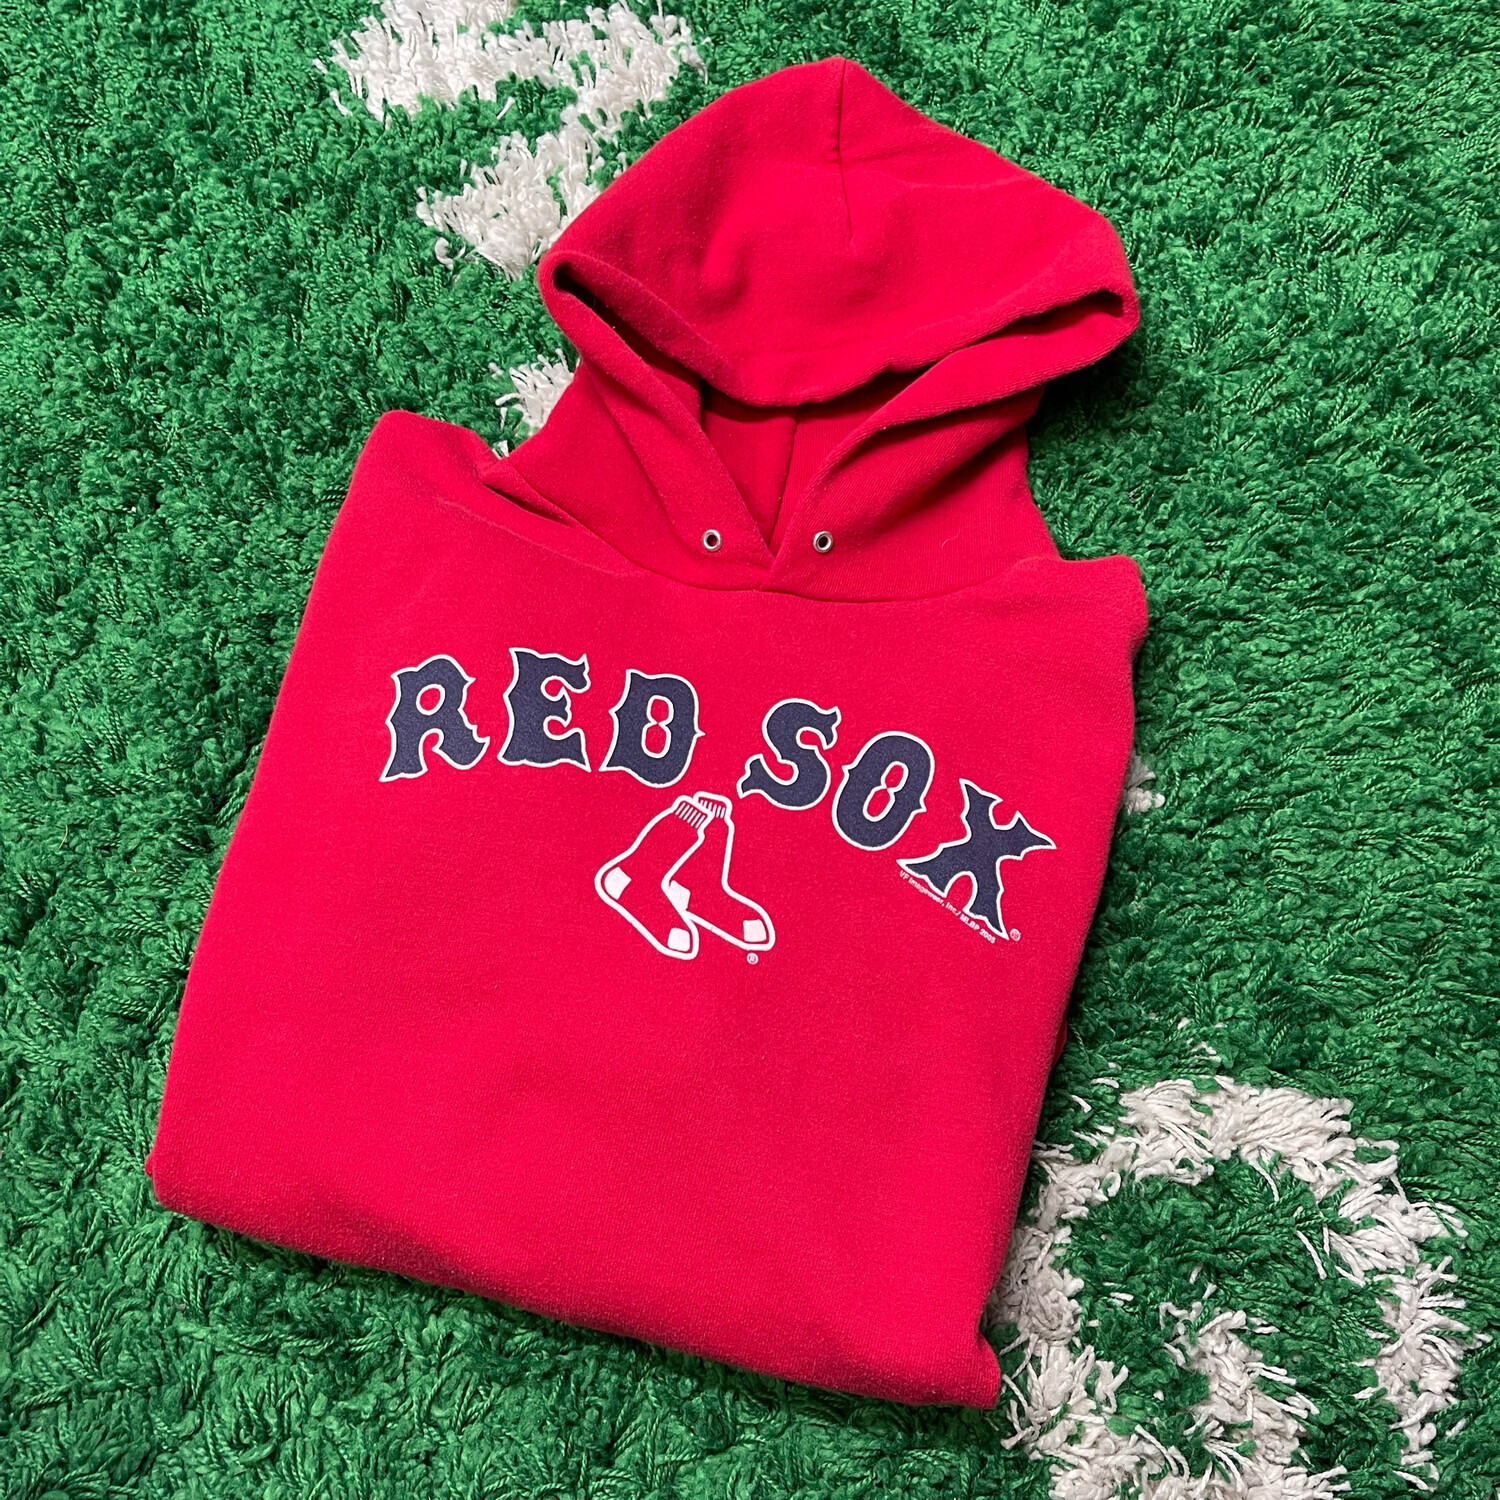 Boston Red Sox 2005 Hooded Sweatshirt Size Large 